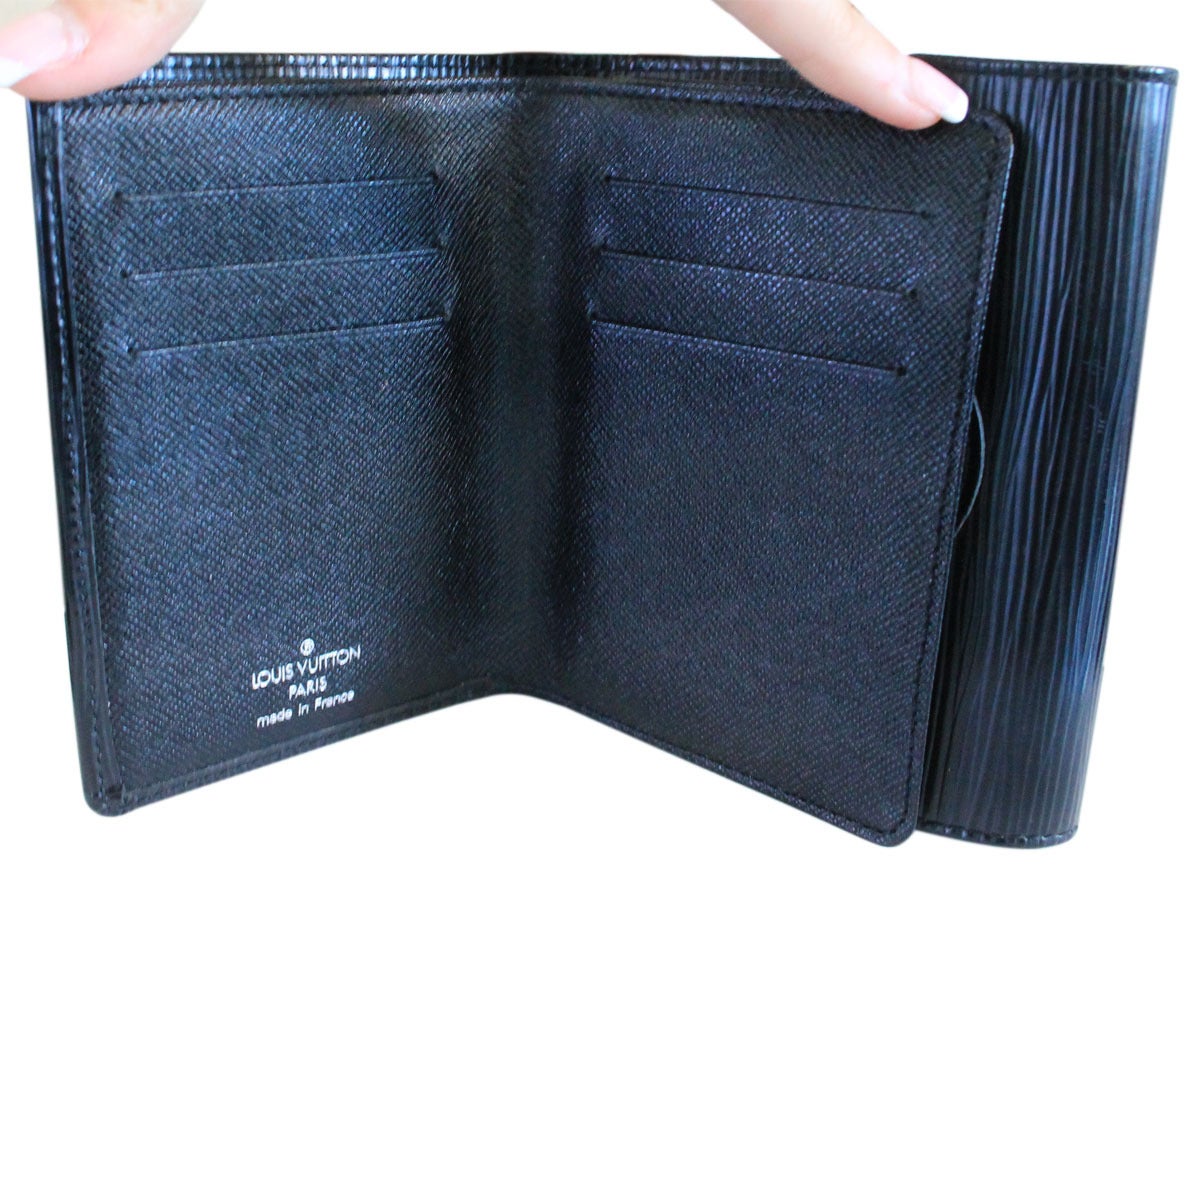 Louis Vuitton Black Epi Leather Koala Wallet in Box at 1stdibs